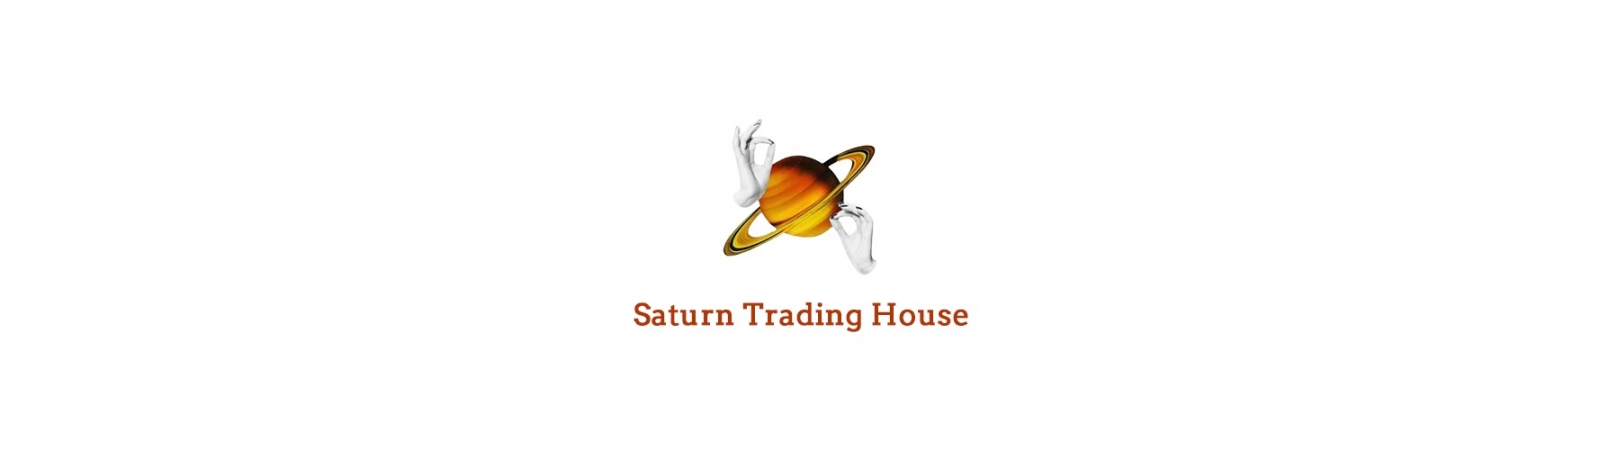 Saturn Trading  House Inc | AuctionNinja